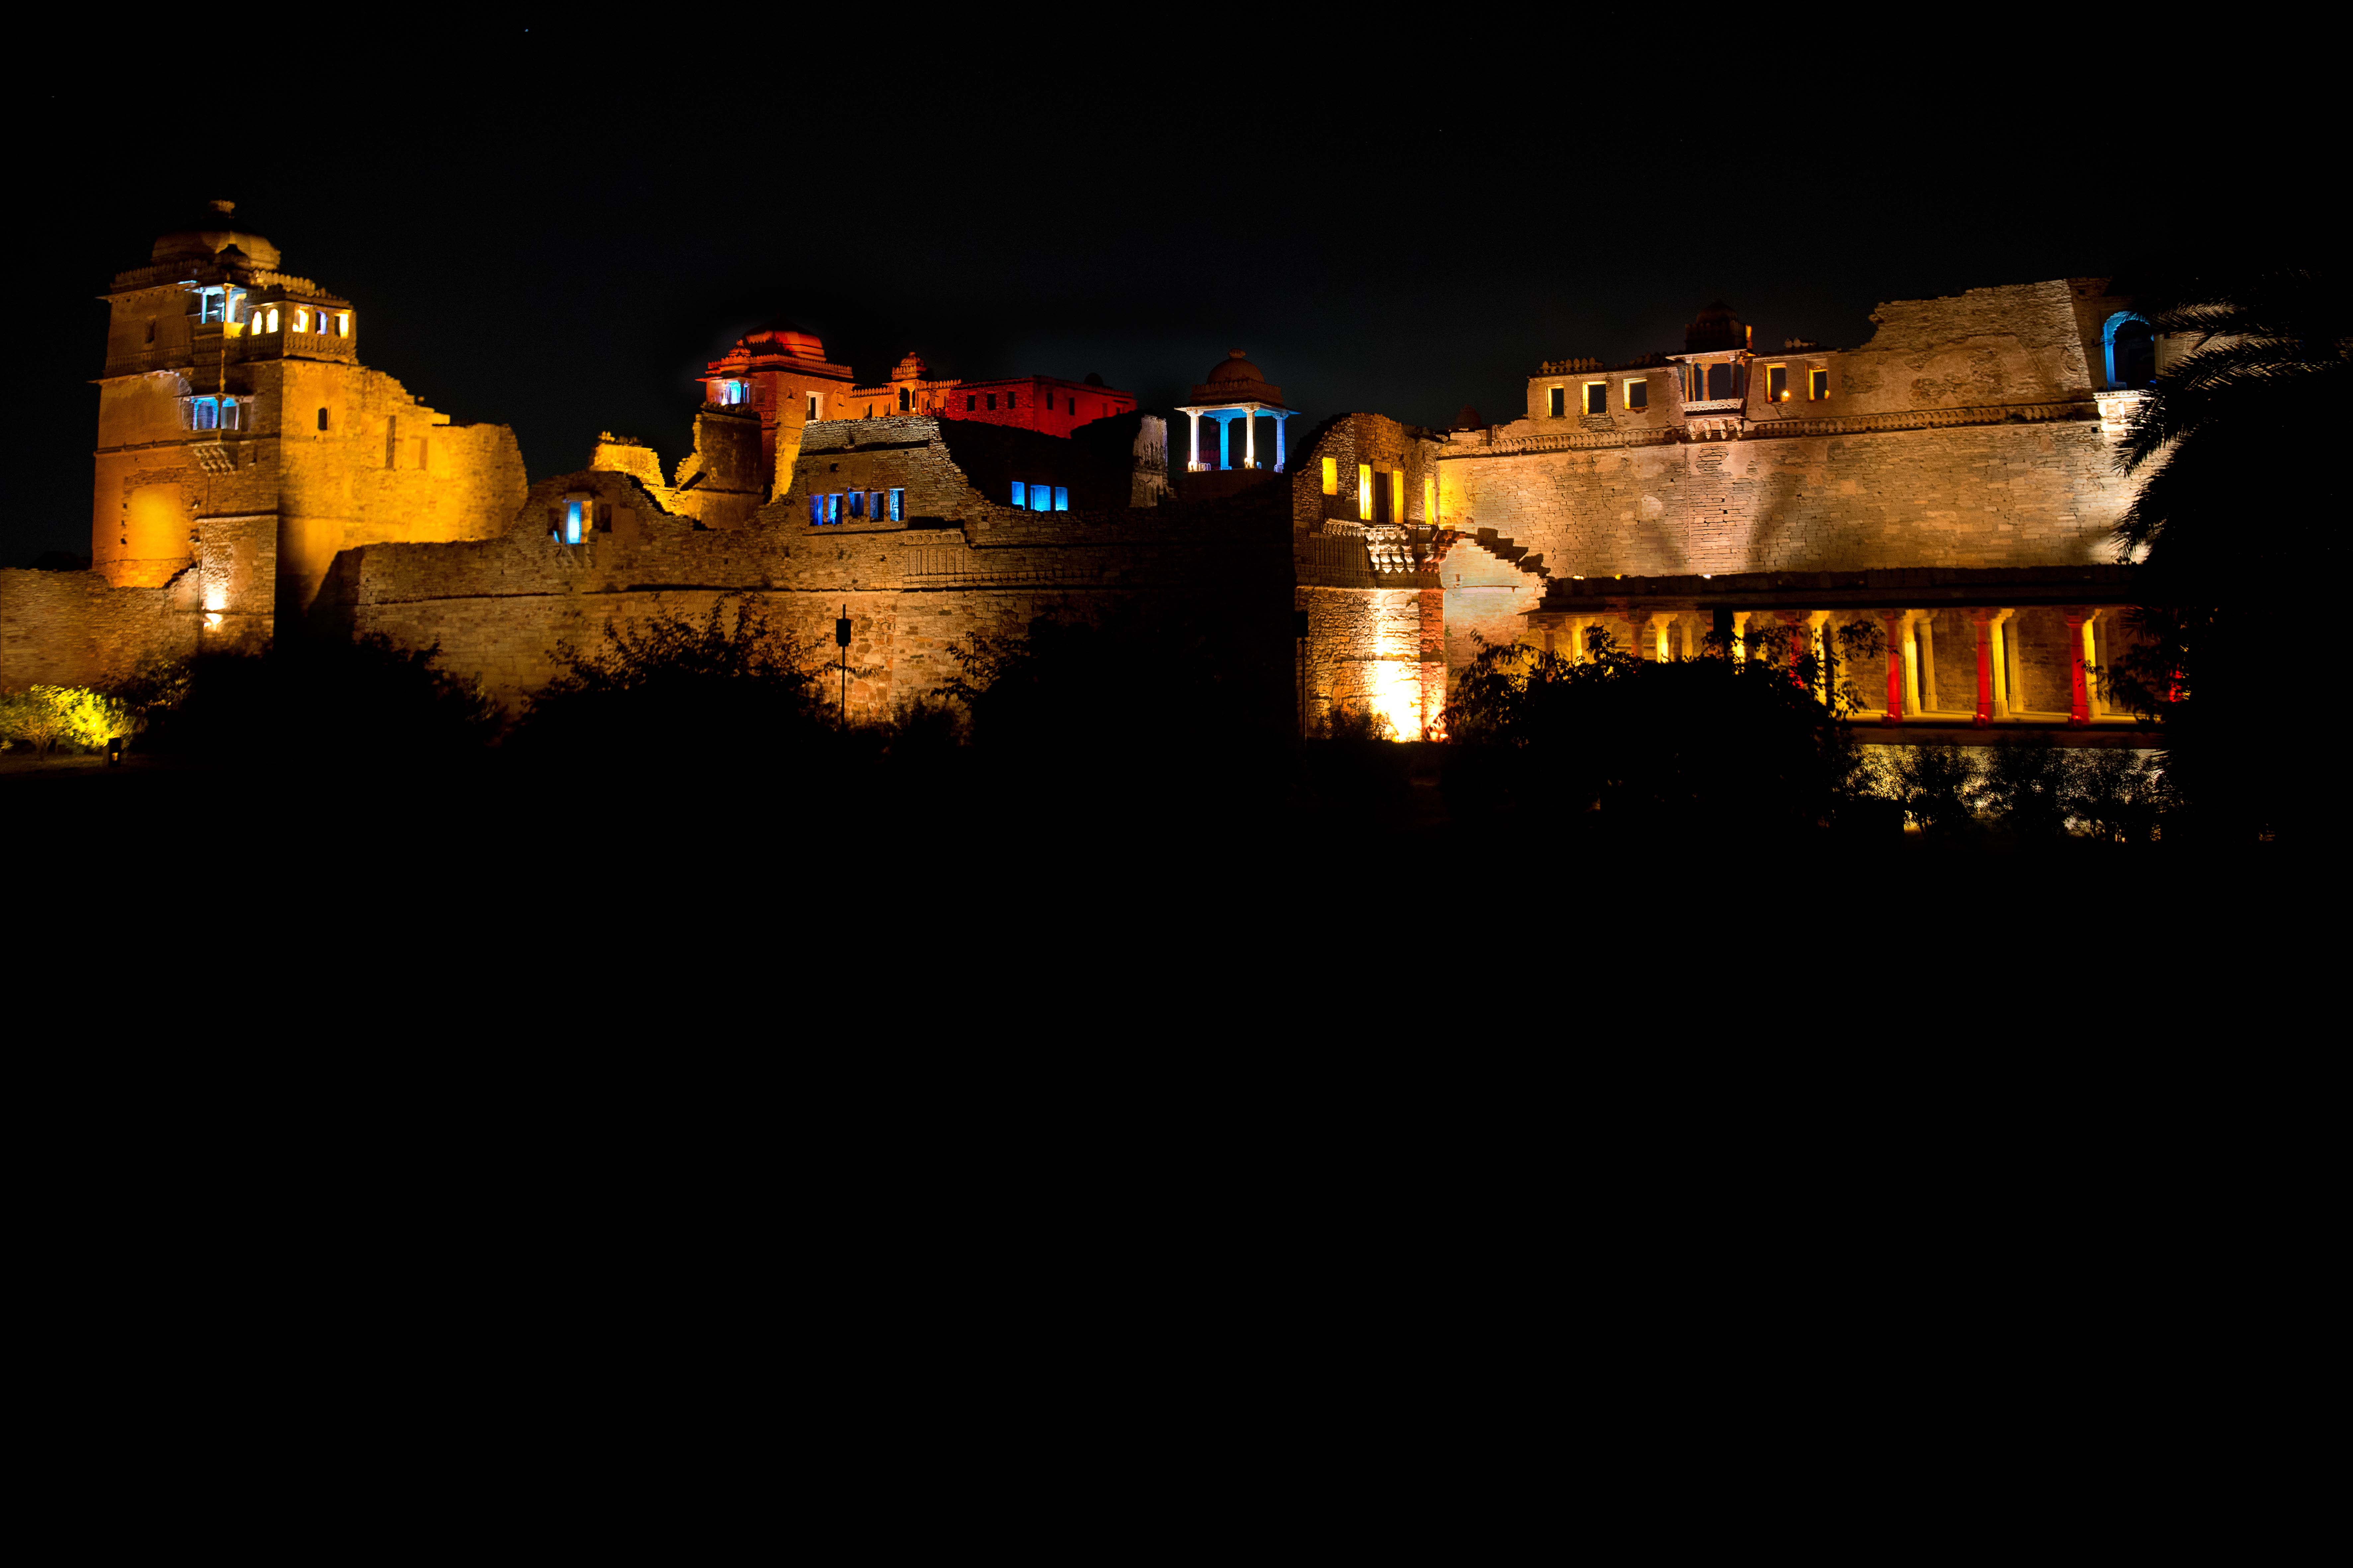 Chittorgarh Fort ועוד מקסמי הודו...